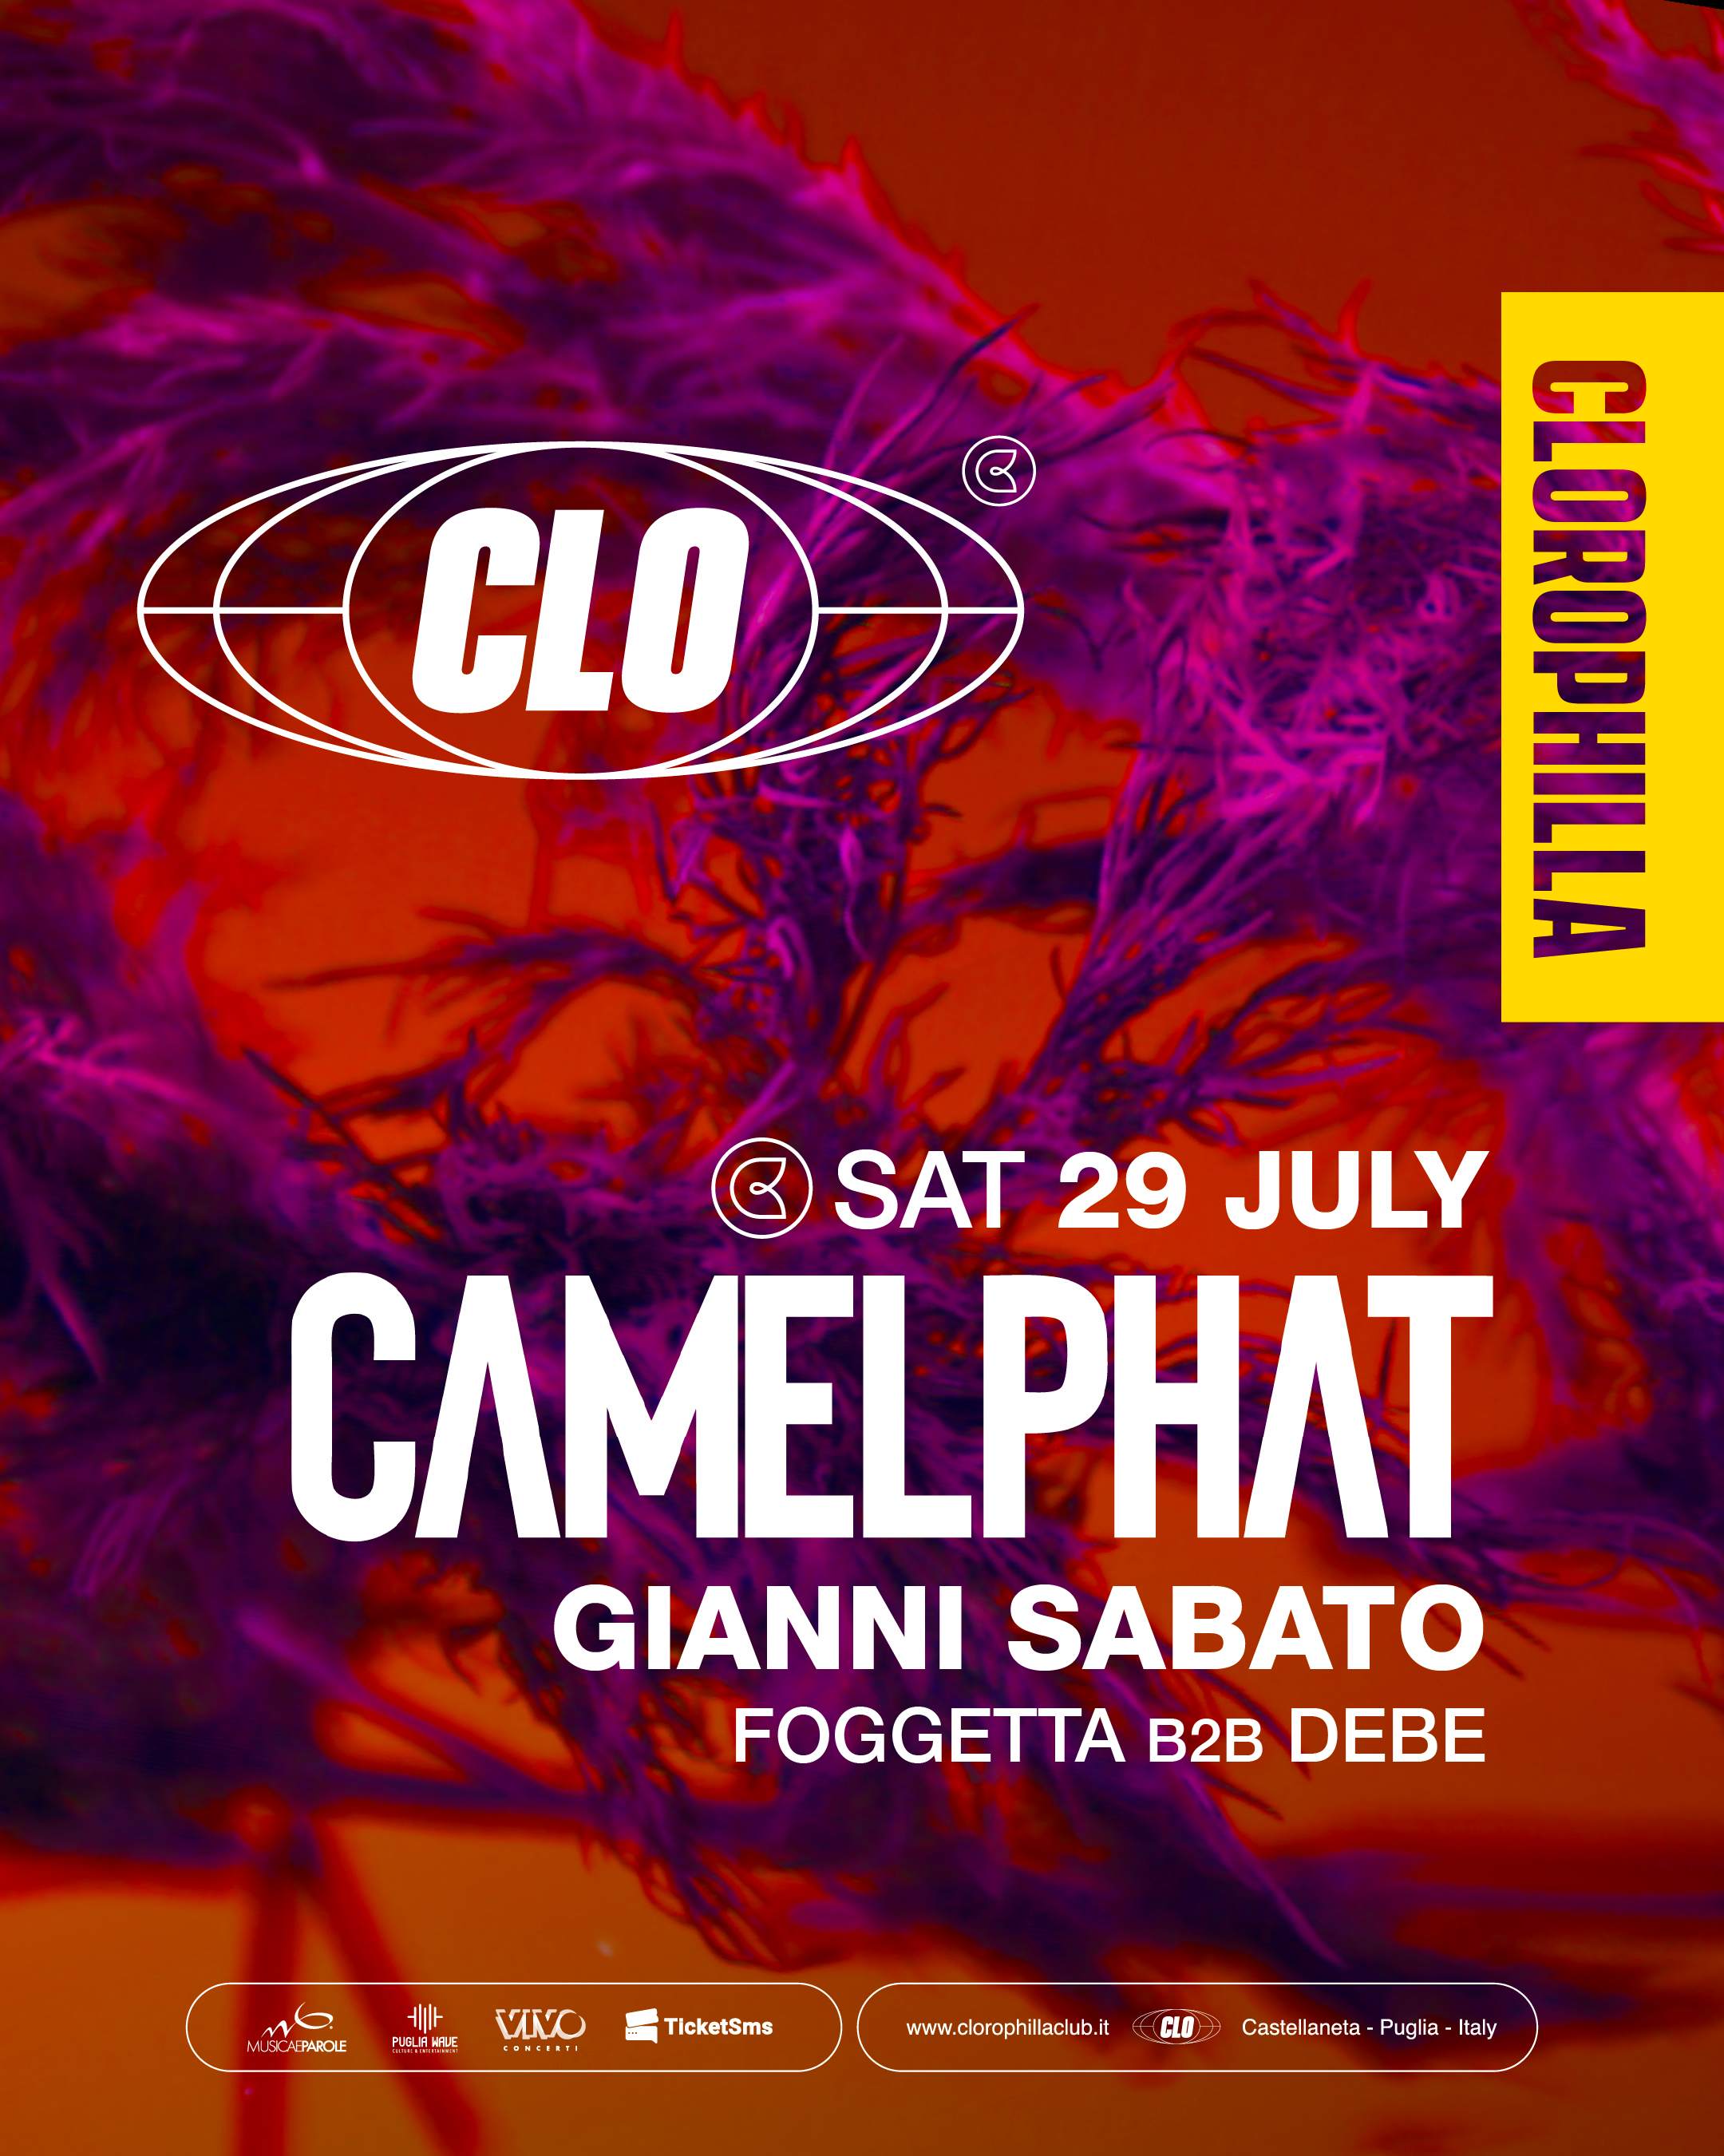 Clorophilla Club with CamelPhat, Gianni Sabato - フライヤー表